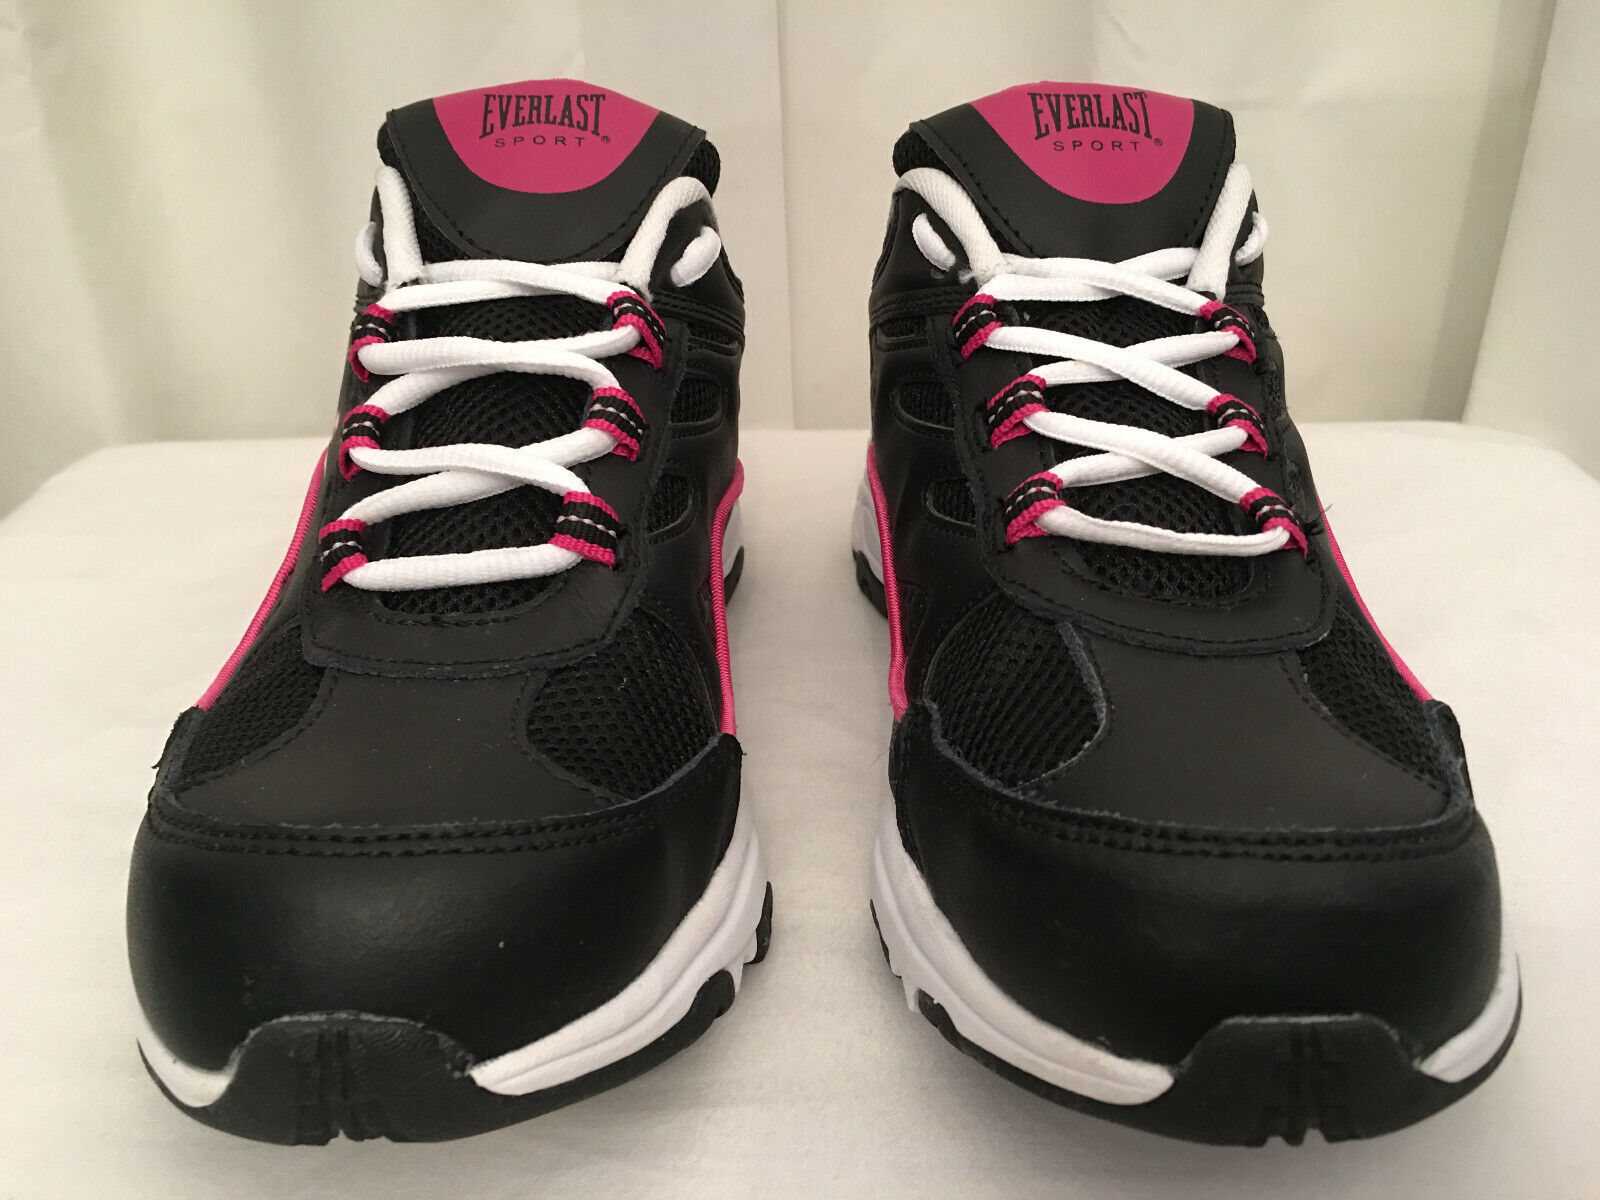 Everlast Women's Black/Pink/White Sport Natalie Lace-Up Sneaker, Size 8.5M